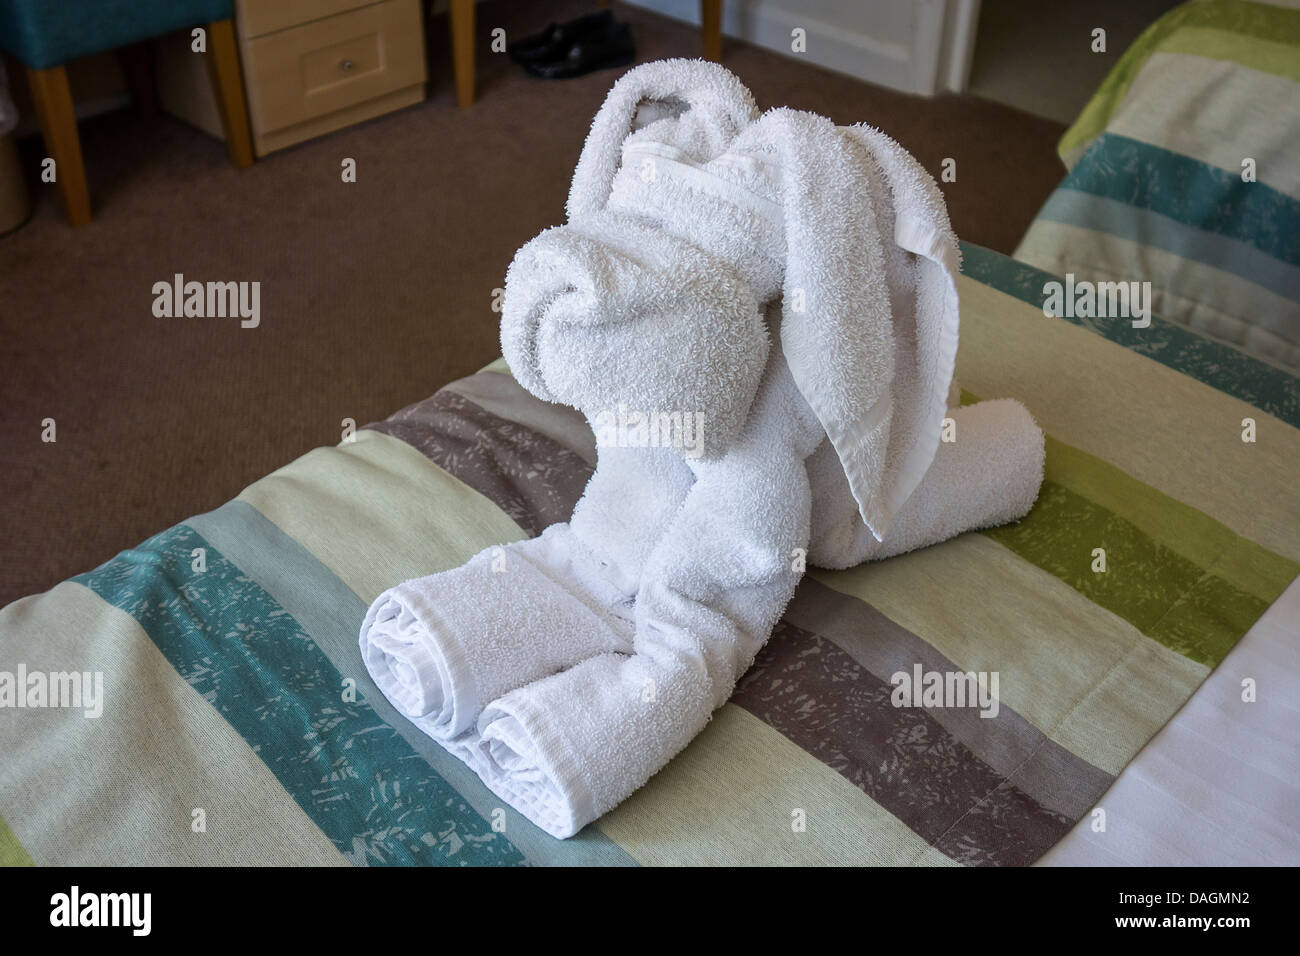 Doblar toallas fotografías e imágenes de alta resolución - Alamy